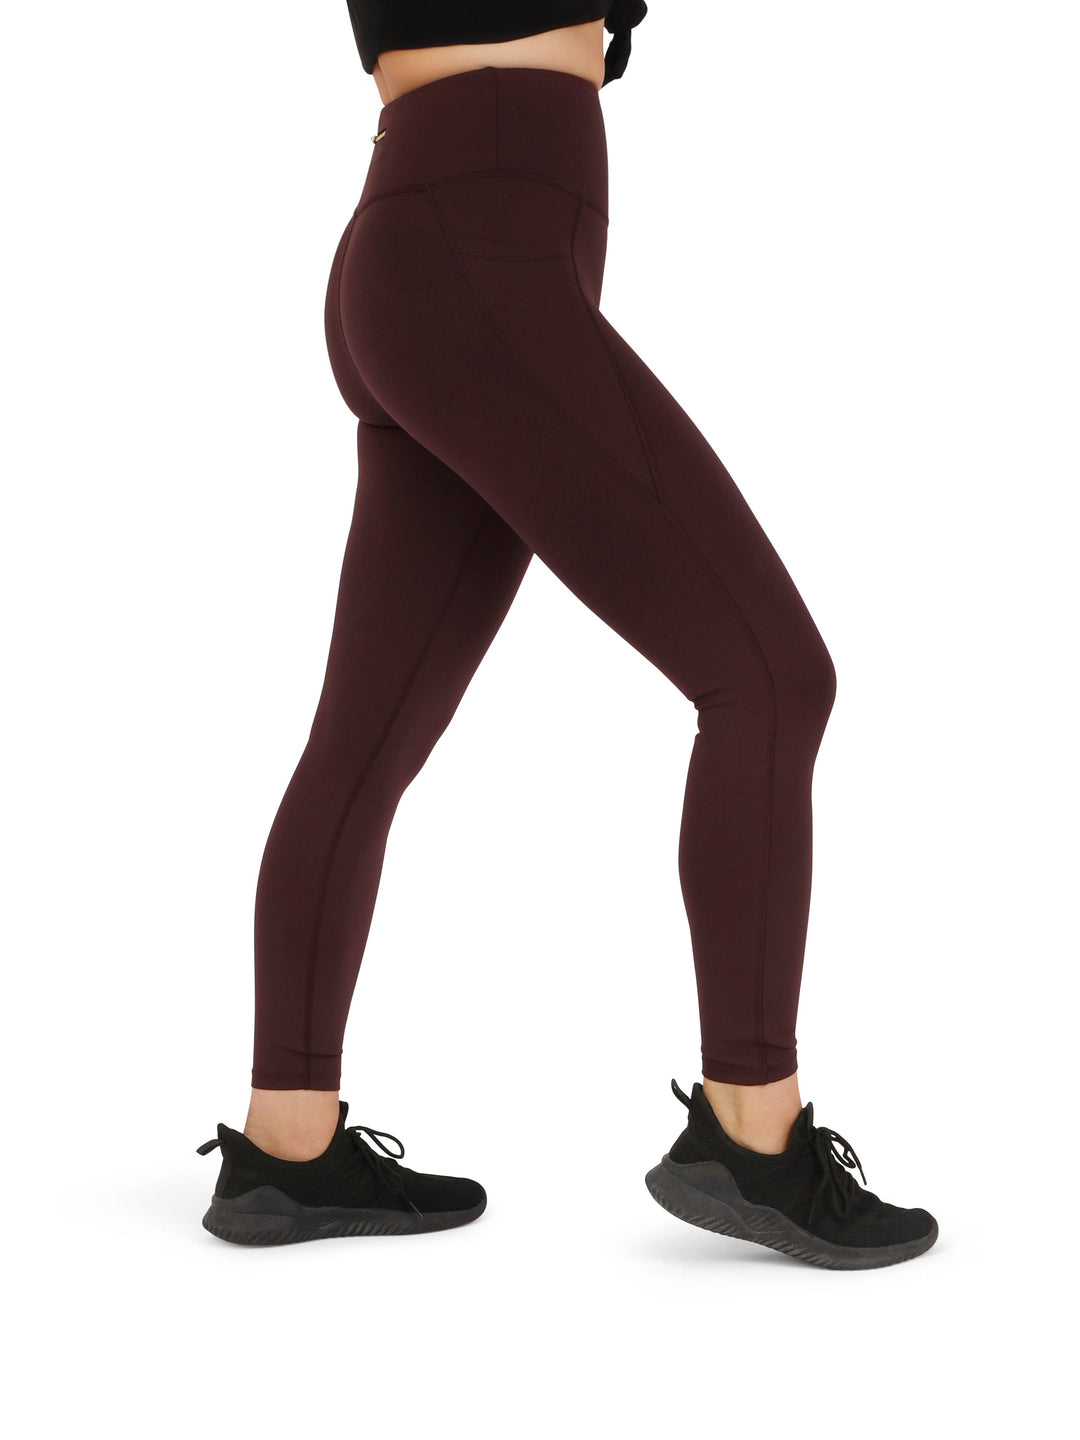 GuyAna Women's Two-Way Zip Crotch Stretch Faux Leather Leggings